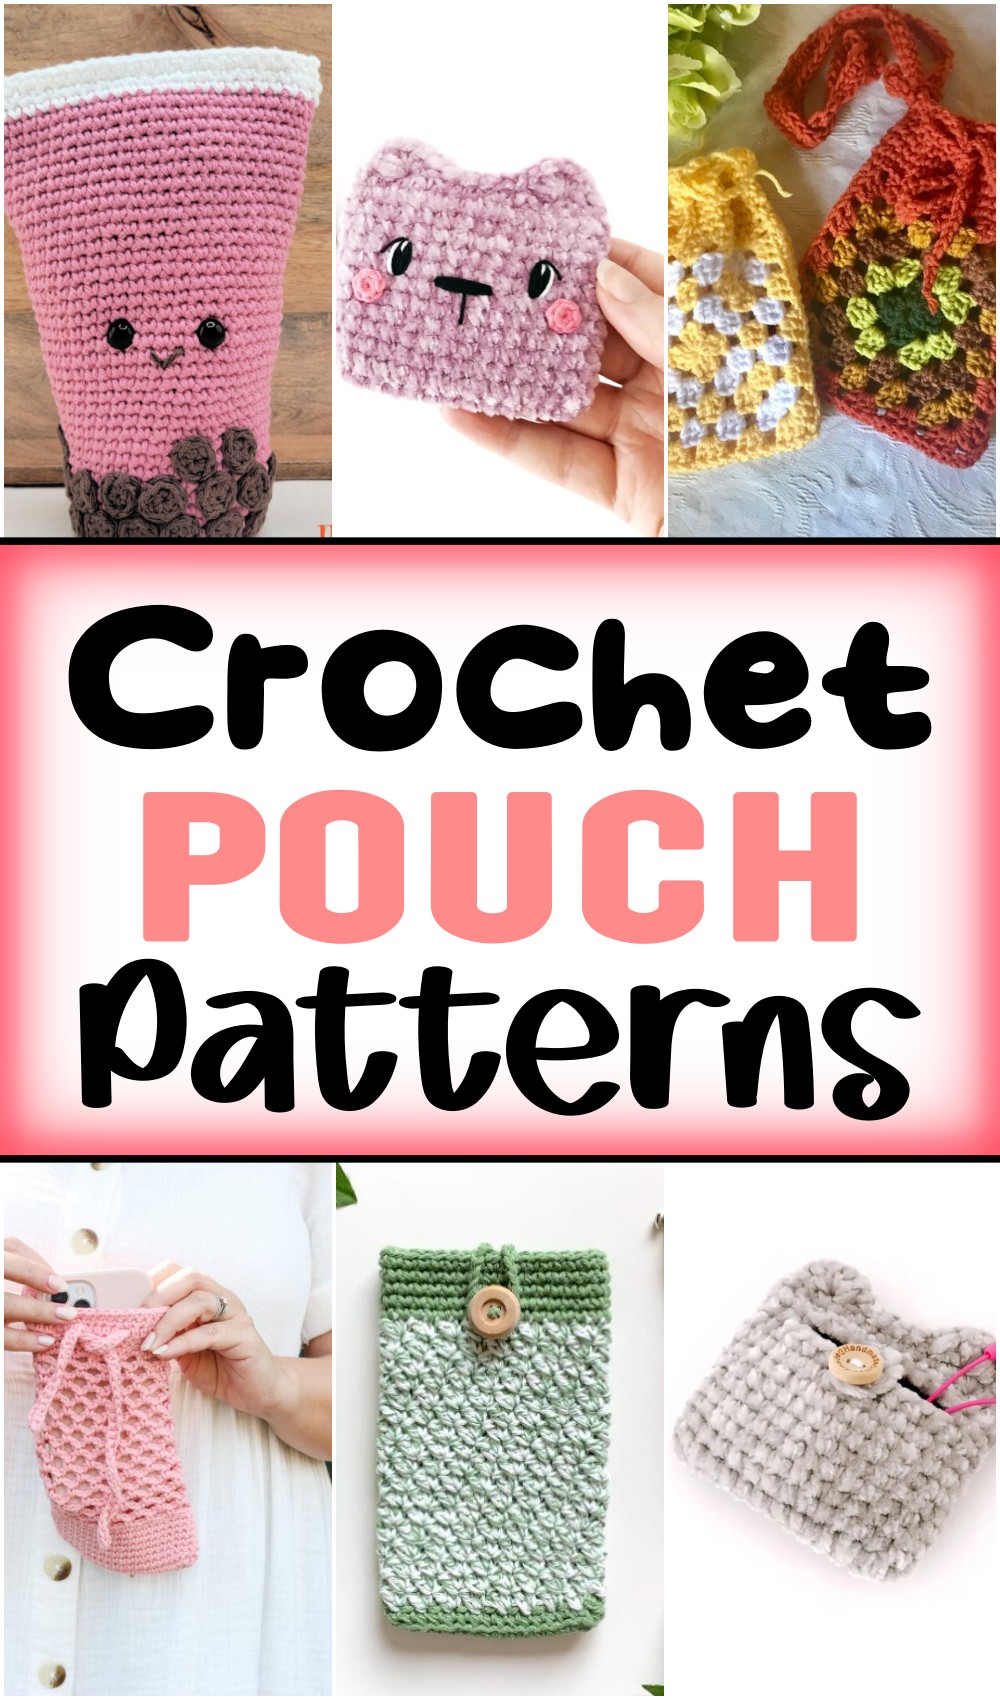 Crochet Pouch Patterns